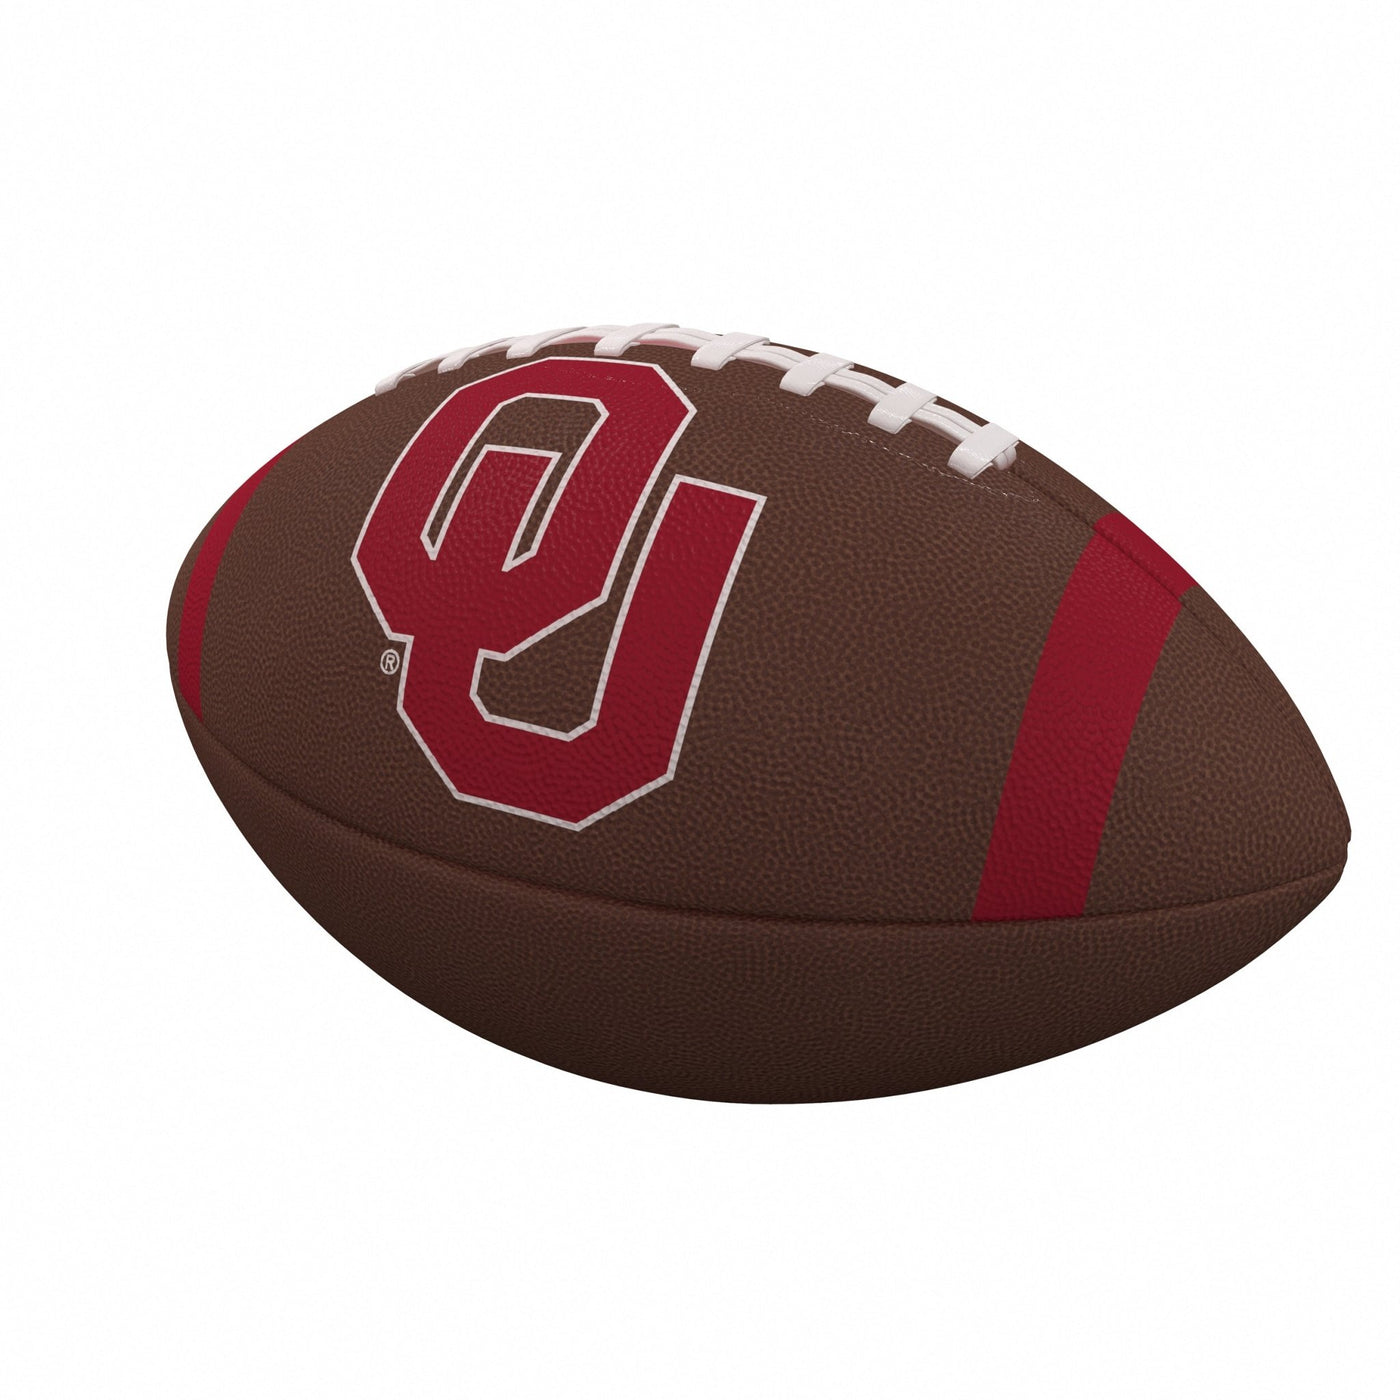 Oklahoma Team Stripe Official-Size Composite Football - Logo Brands